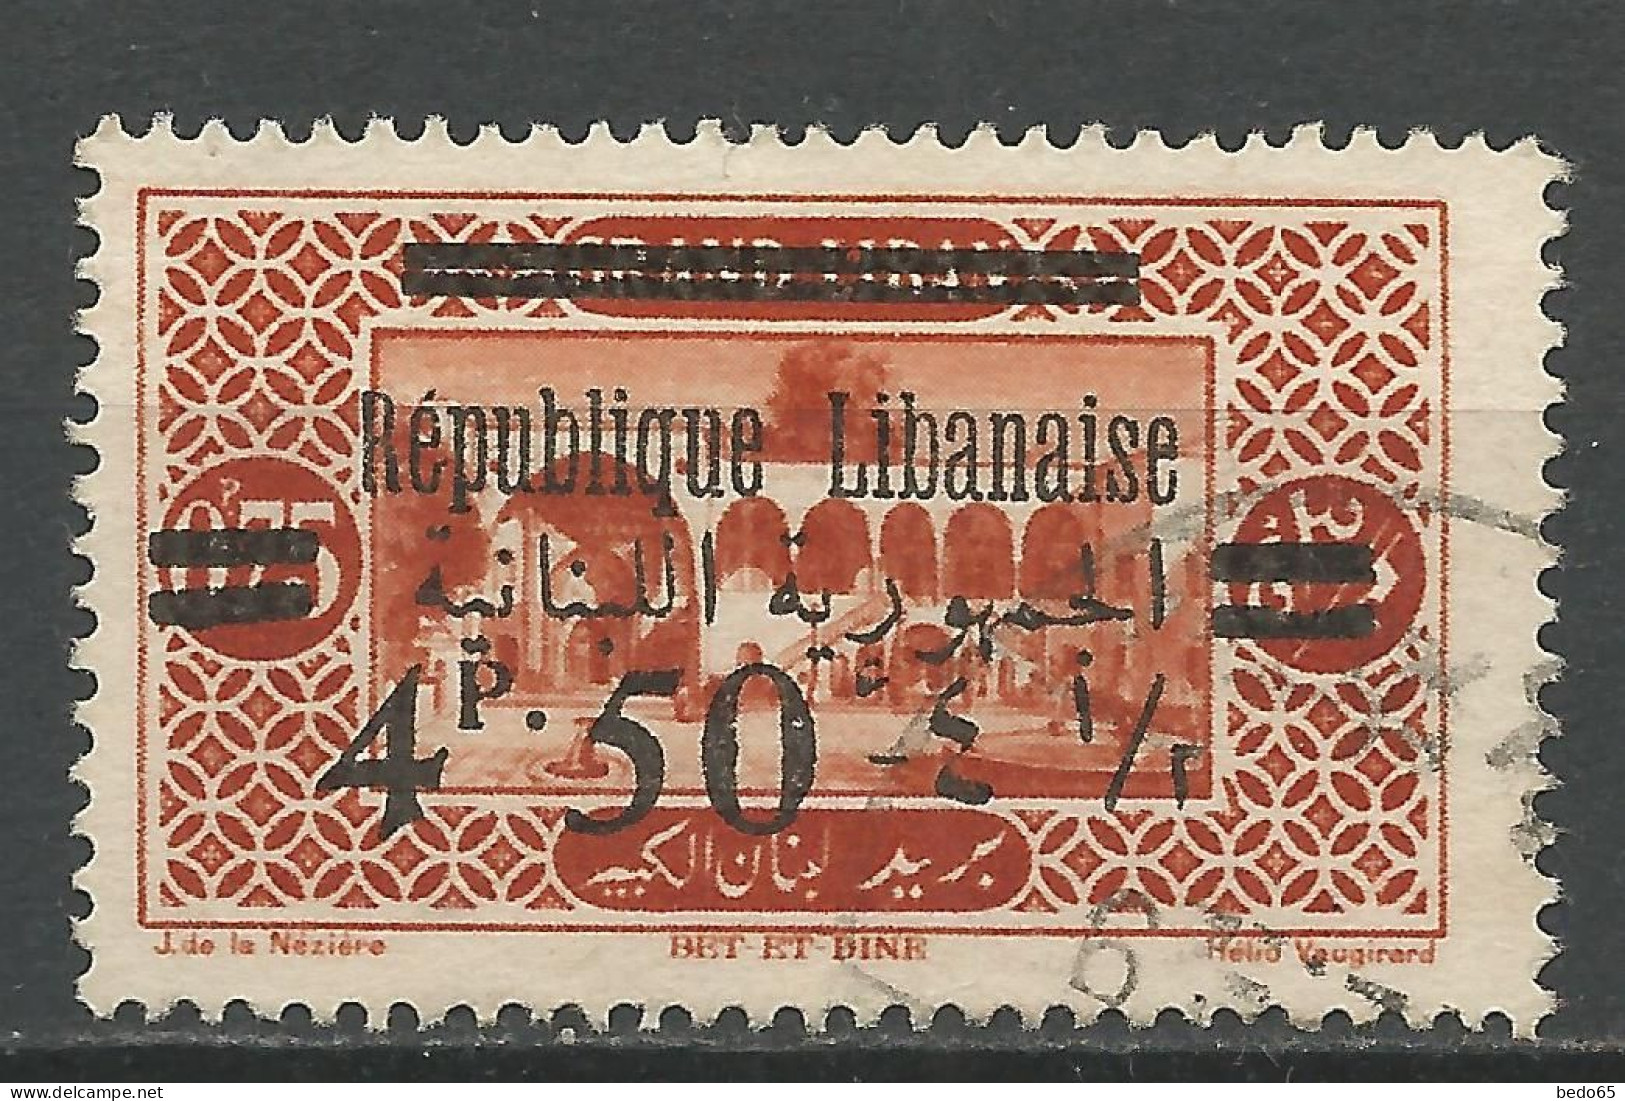 GRAND LIBAN N° 105 Sans La Monnaie Arabe OBL / Used - Gebraucht